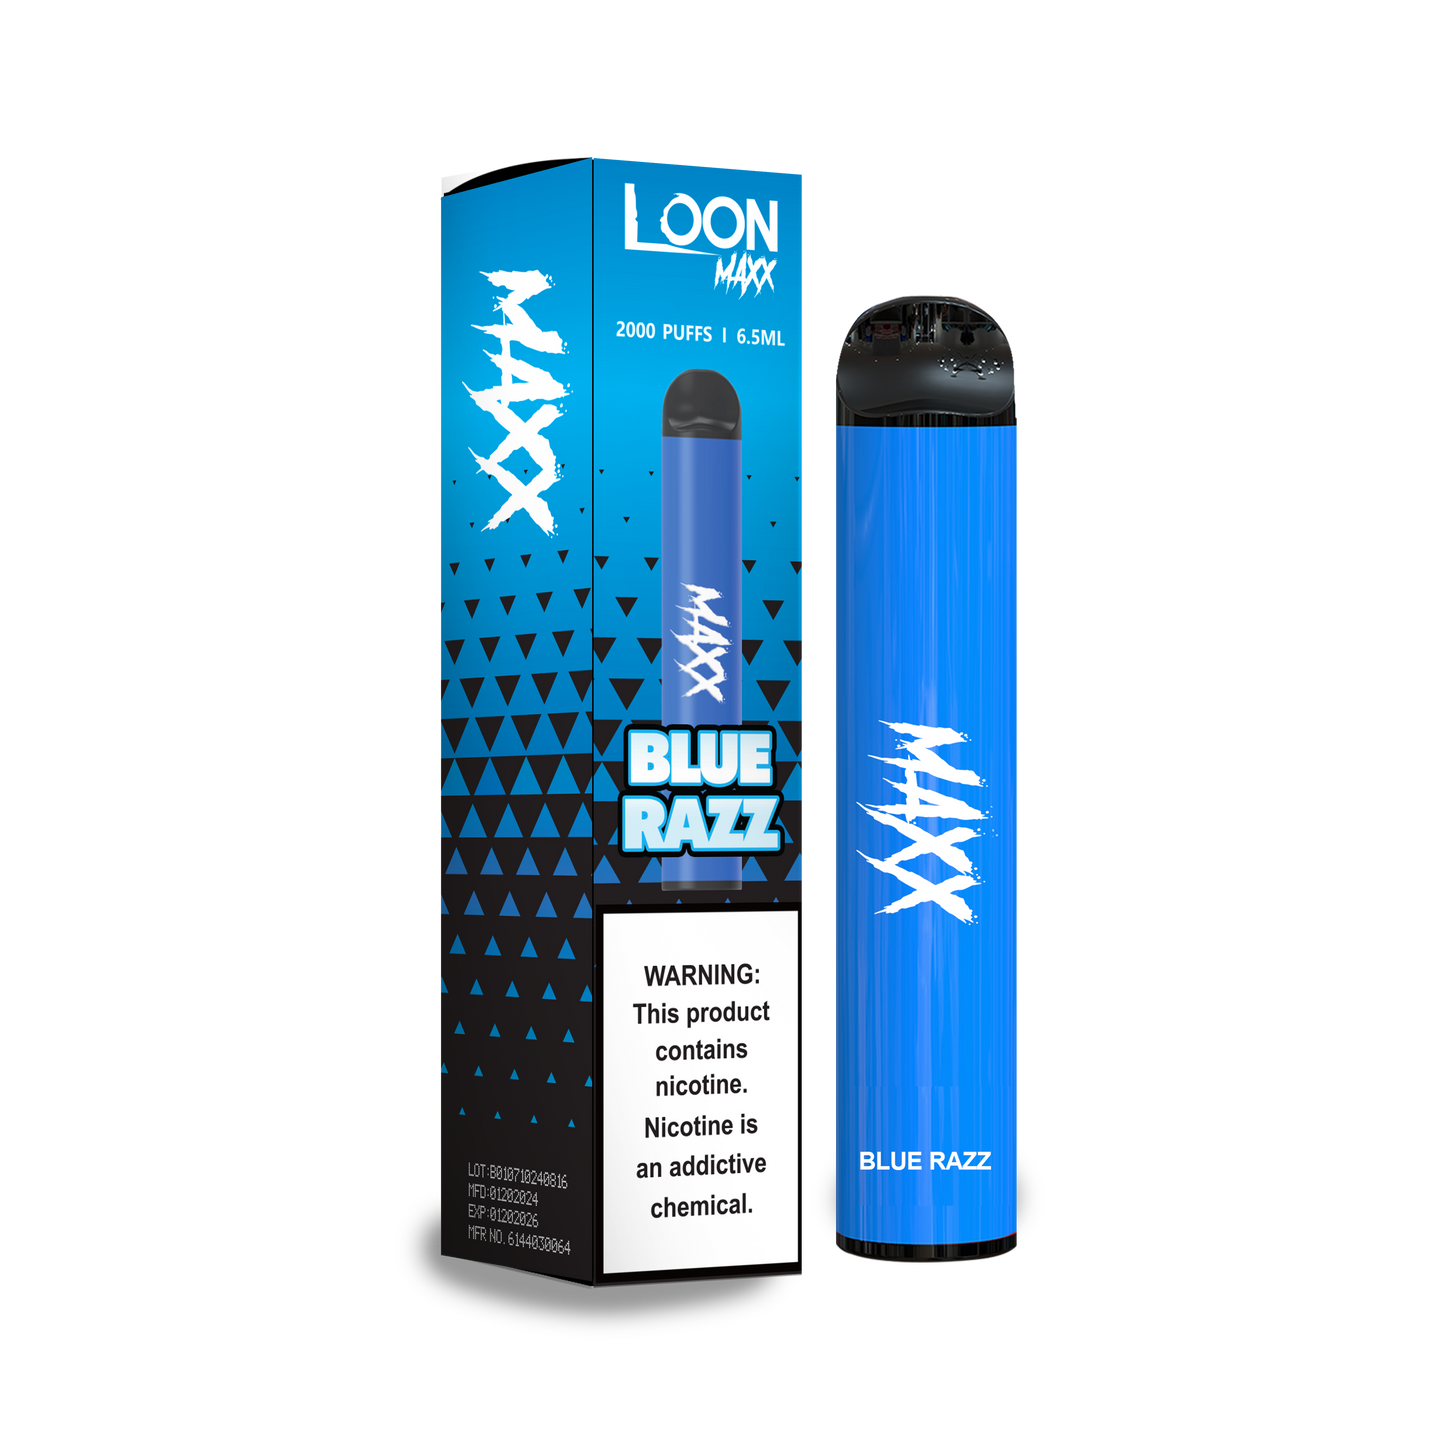 LOON MAXX - BLUE RAZZ